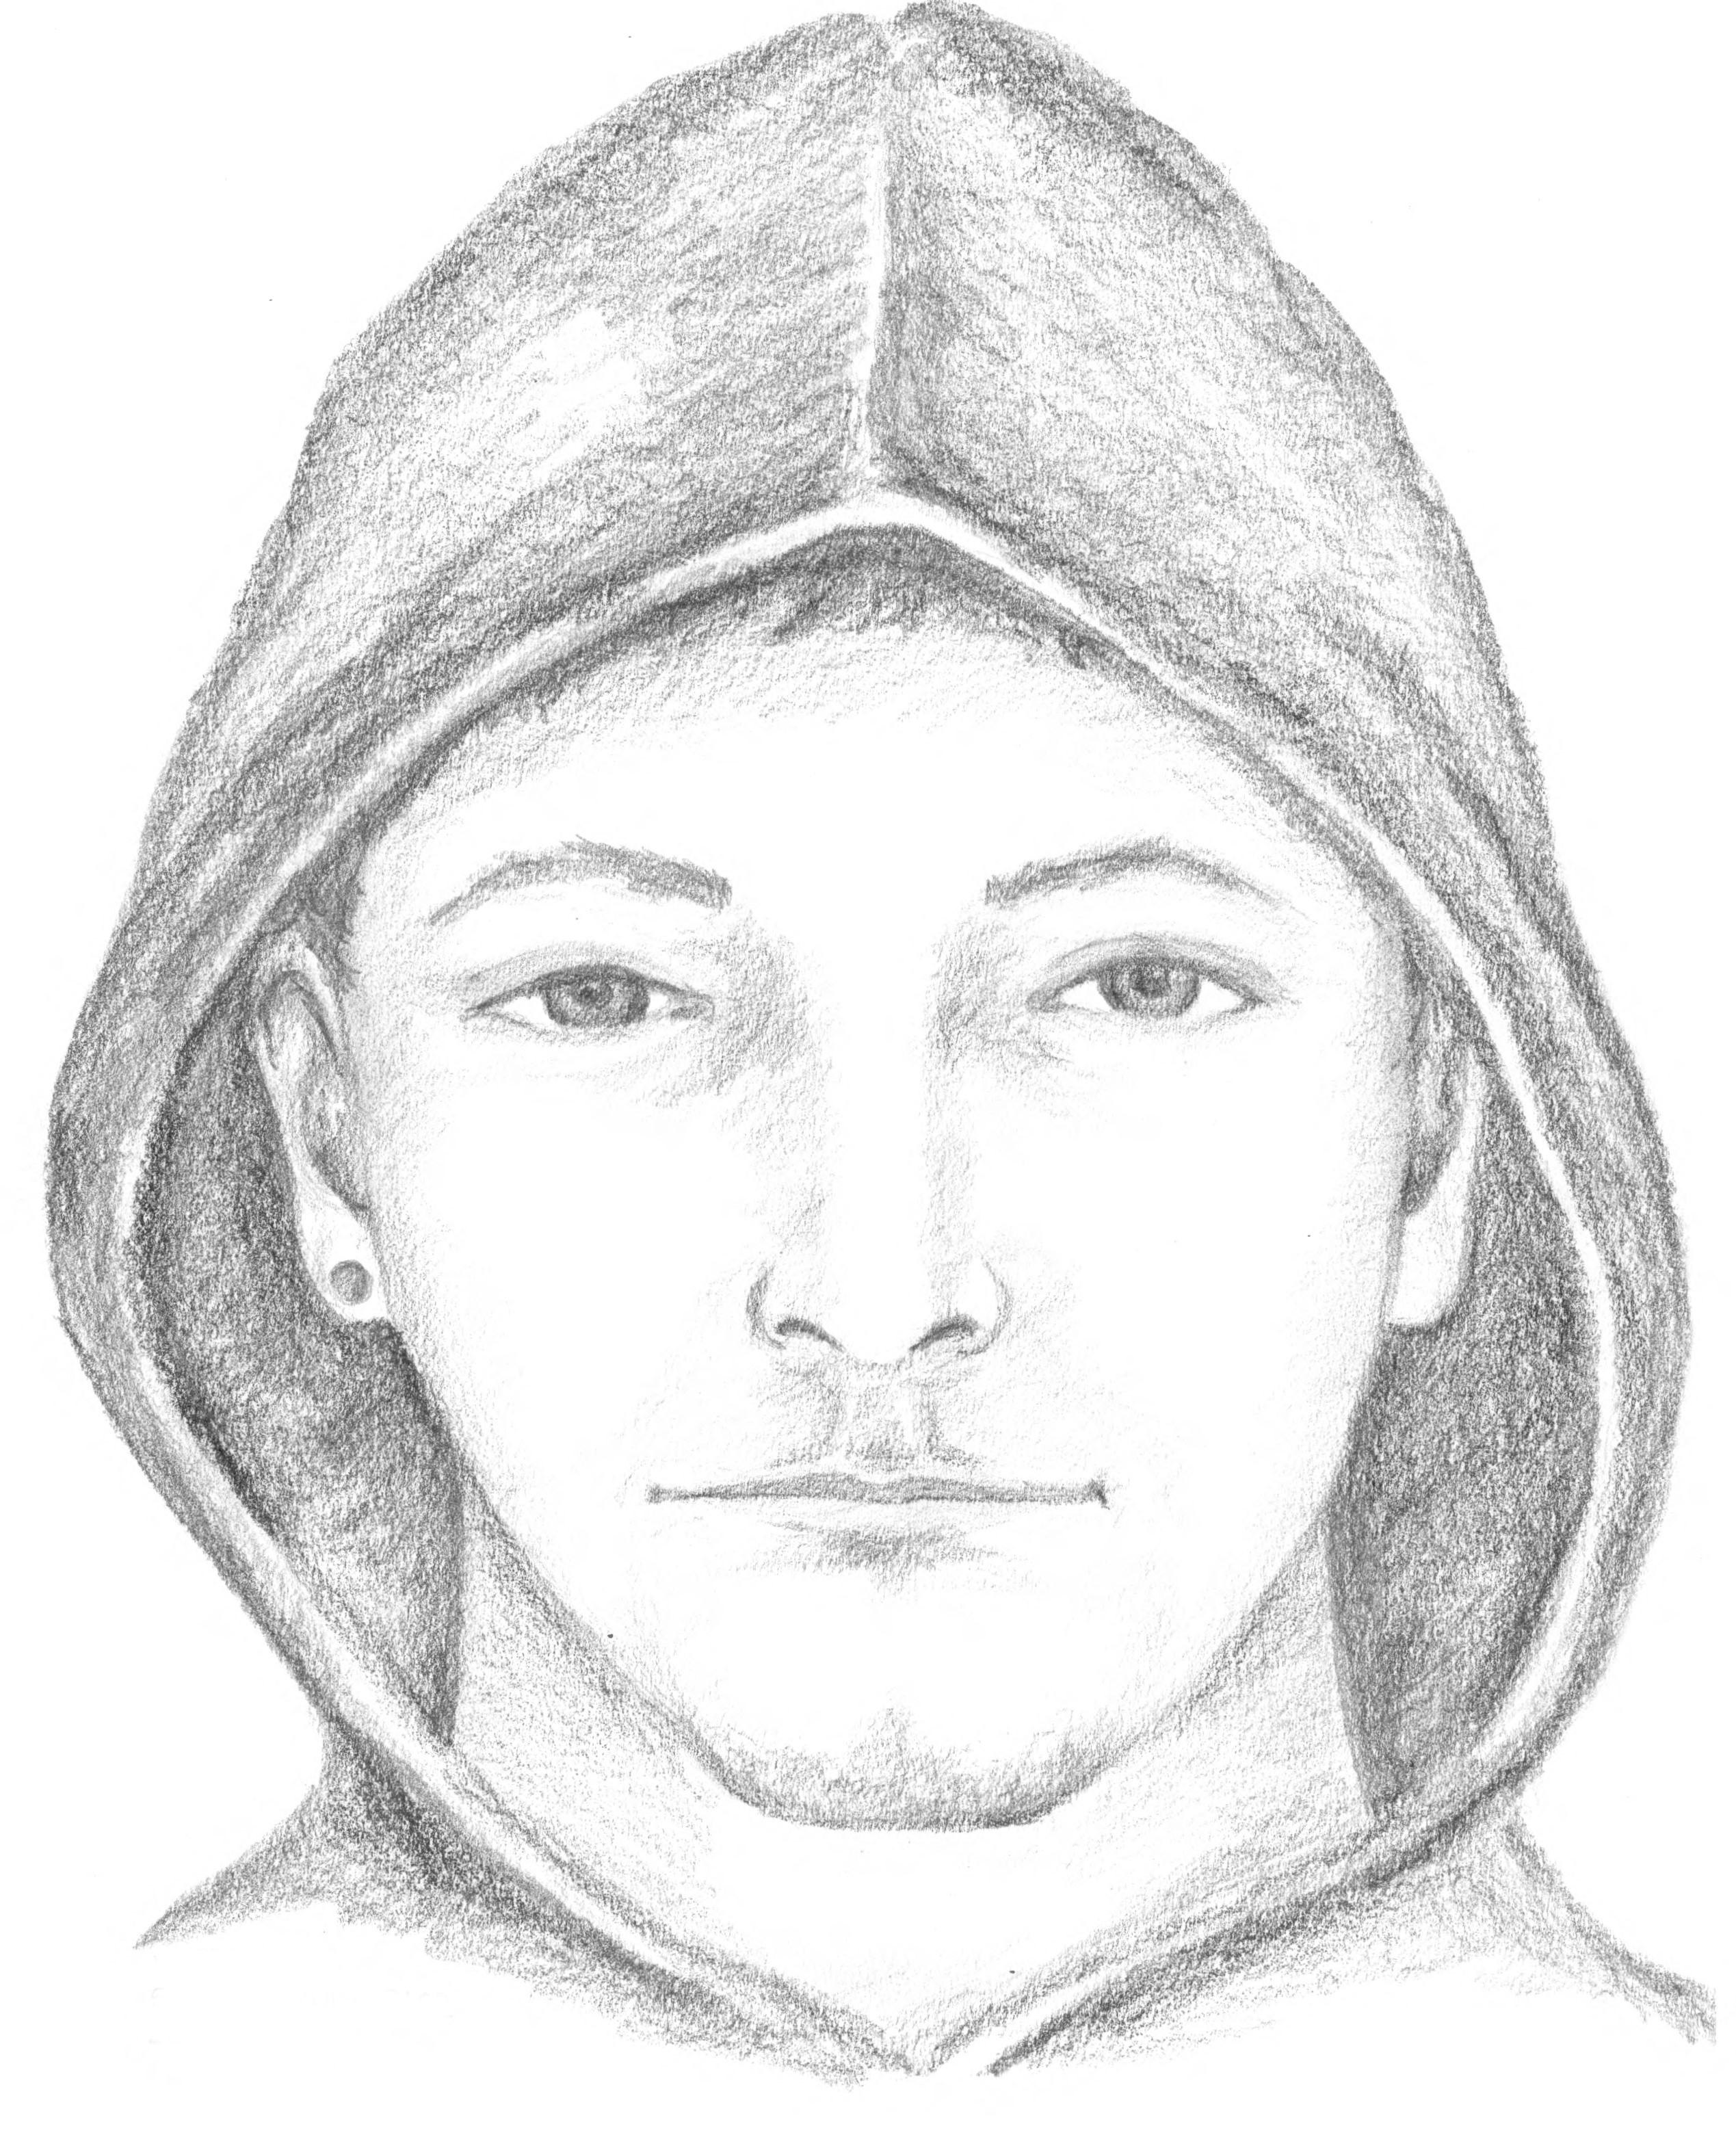 Surrey RCMP release composite sketch of suspect in assault investigation